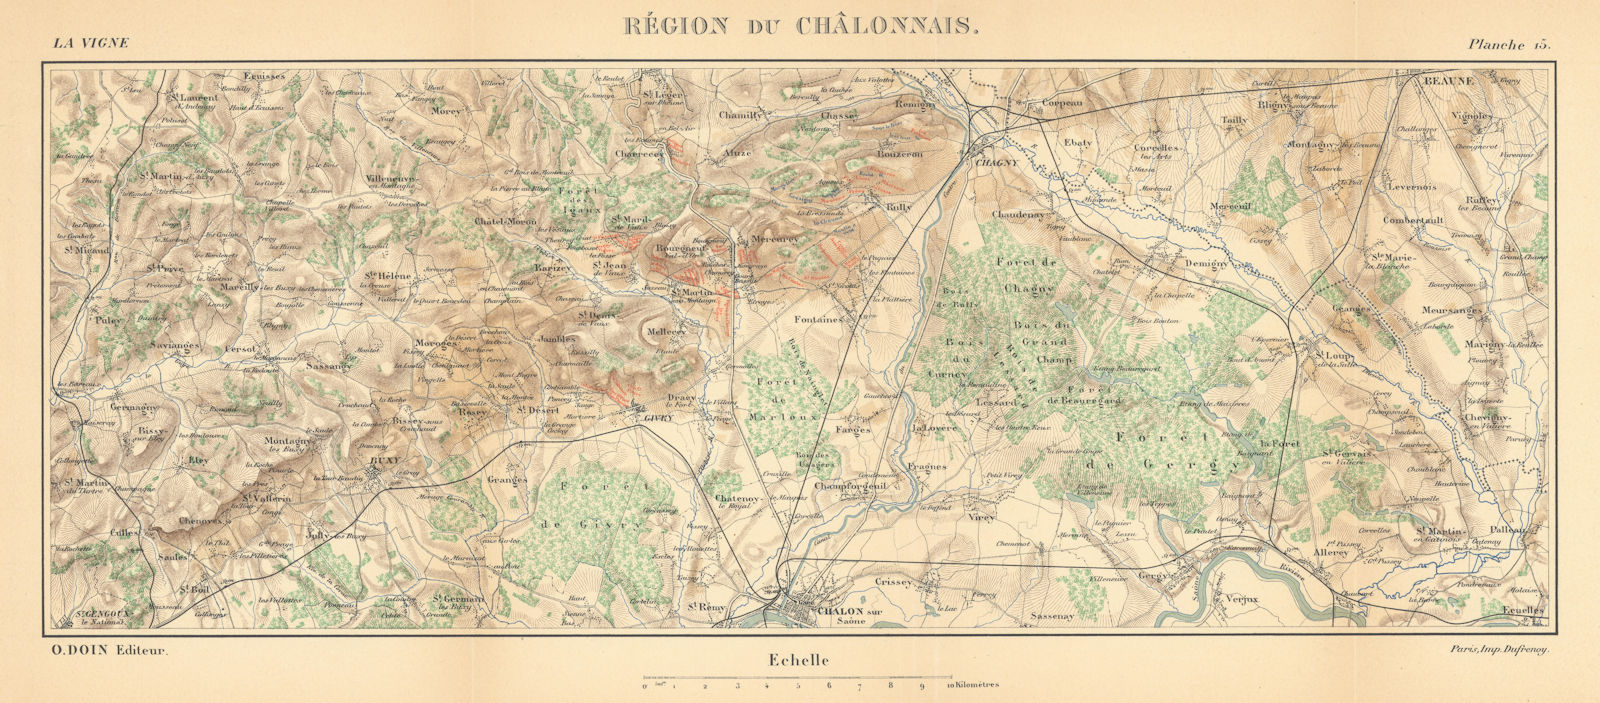 Associate Product Côte Châlonnais. Burgundy wine map. HAUSERMANN 1901 old antique plan chart